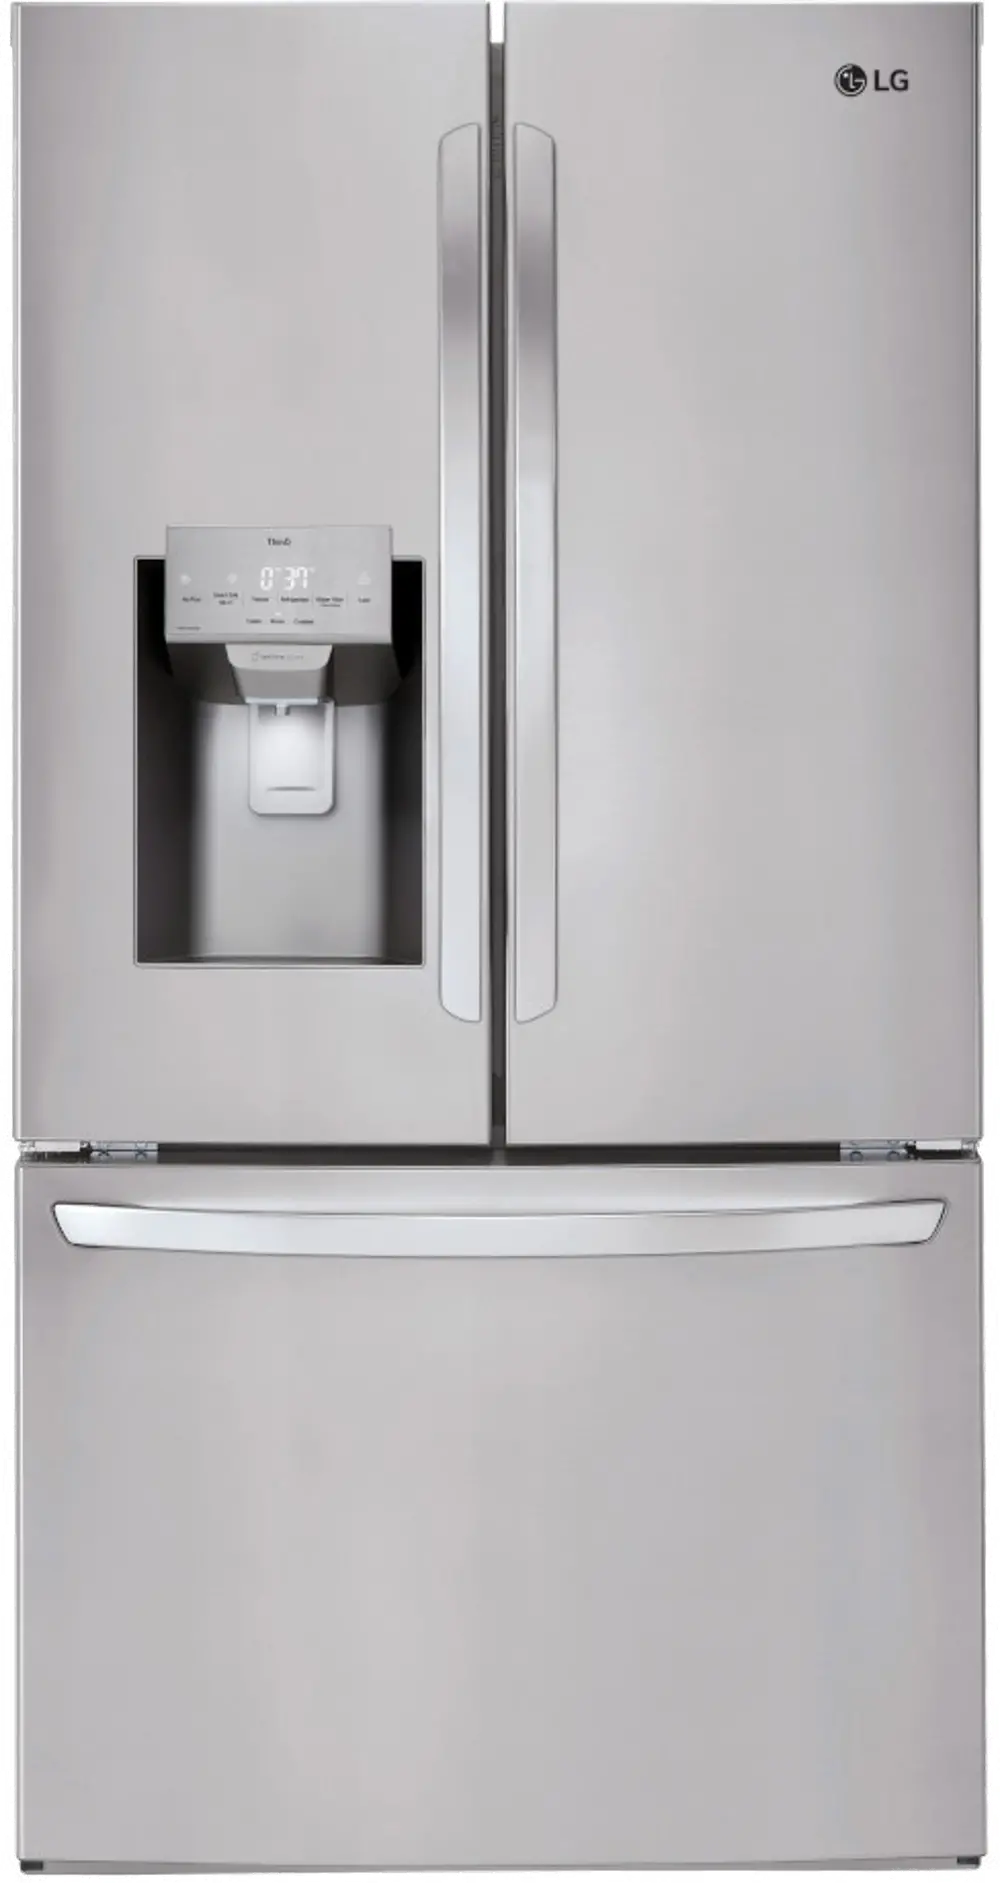 LRFS28XBS LG 28 Cu Ft French Door Refrigerator - Stainless Steel-1